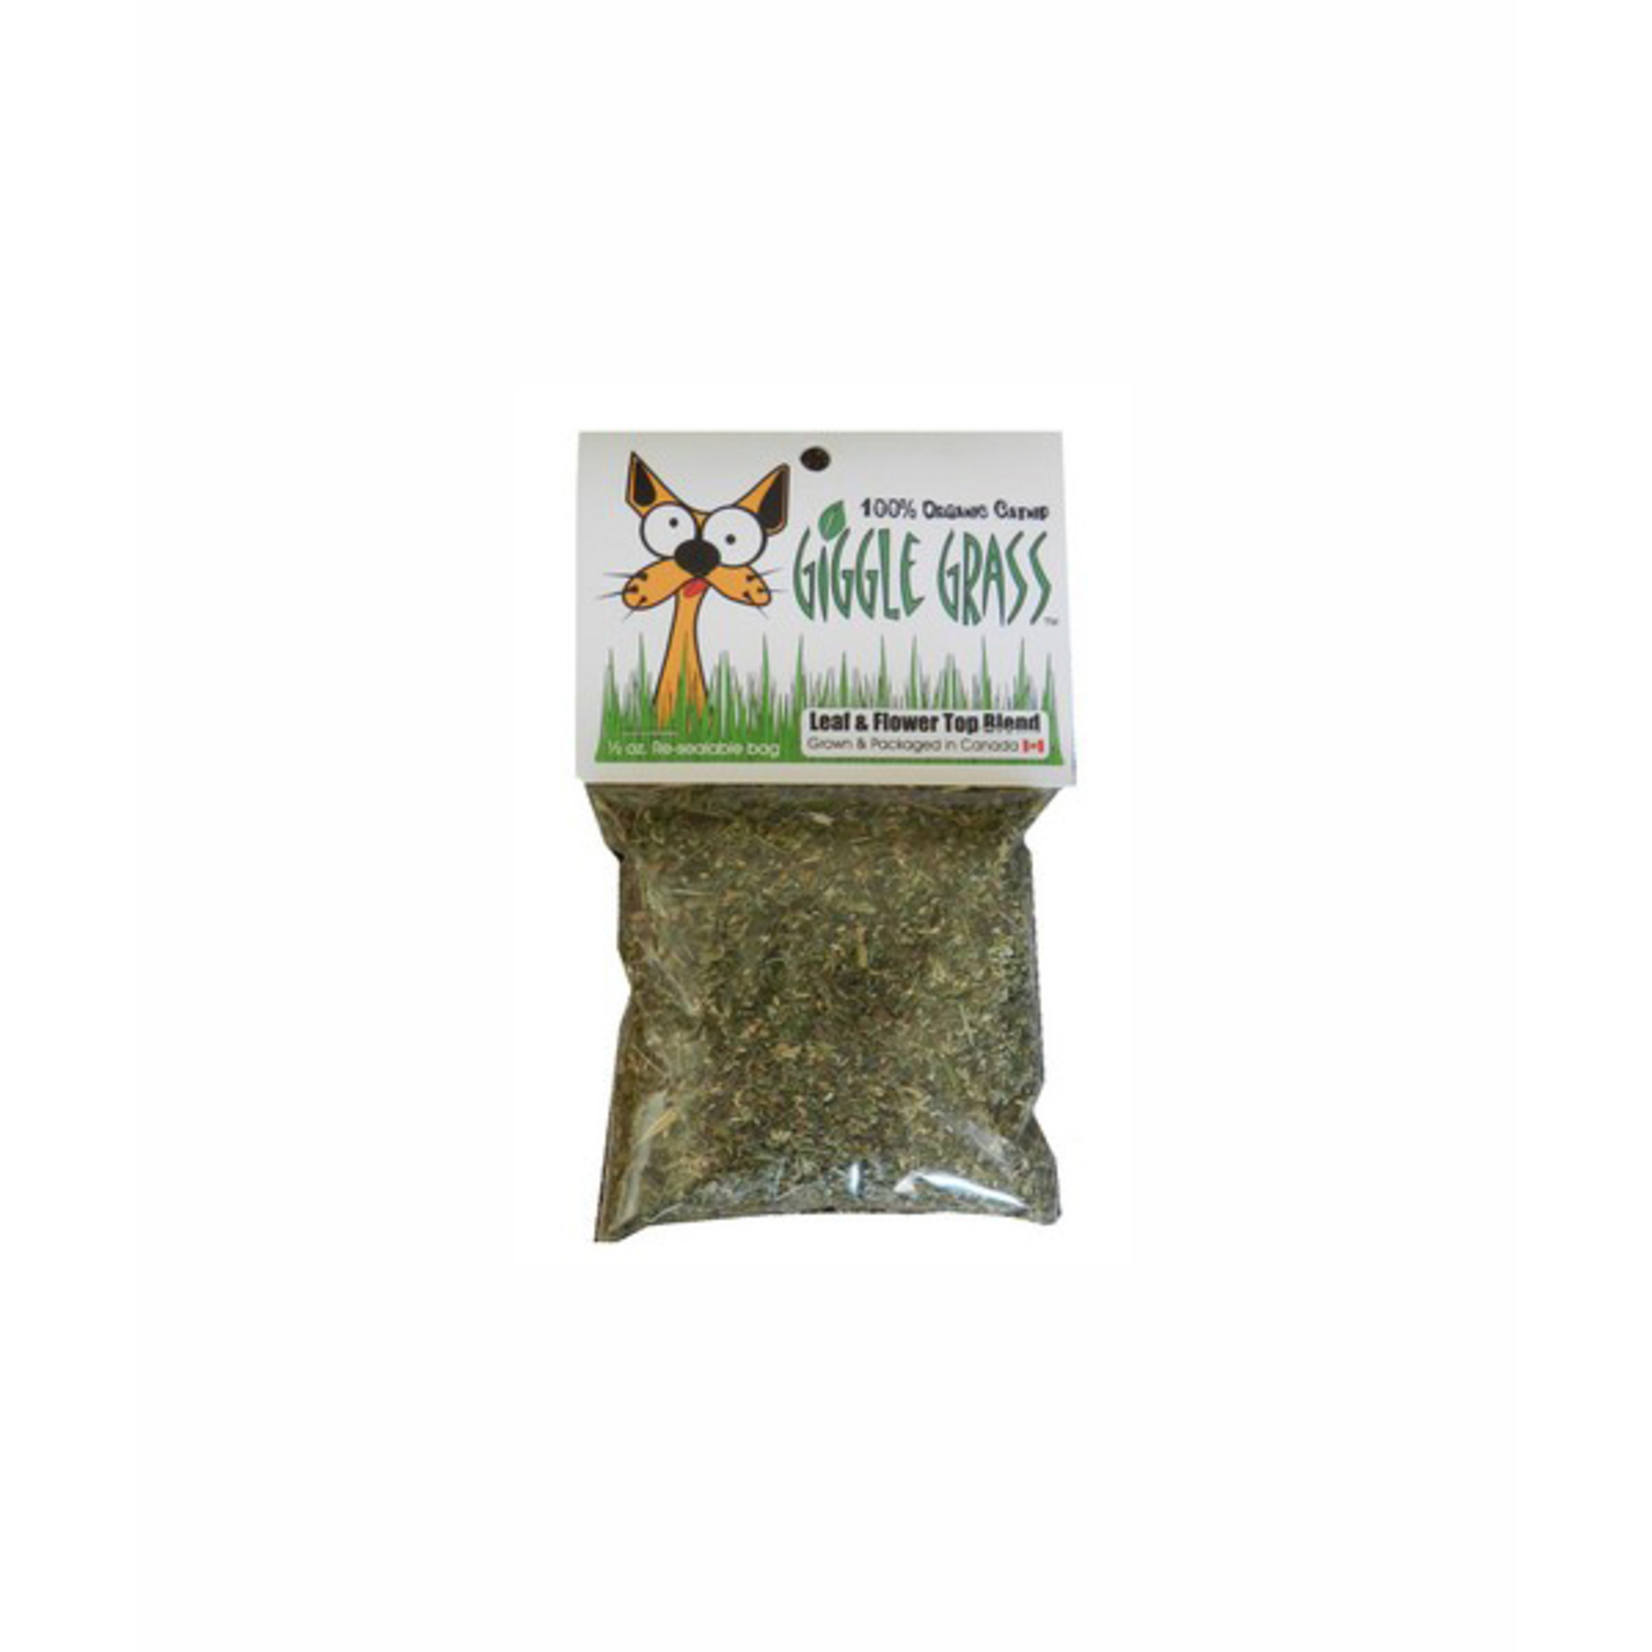 Giggle Grass Giggle Grass Catnip 1/2 oz